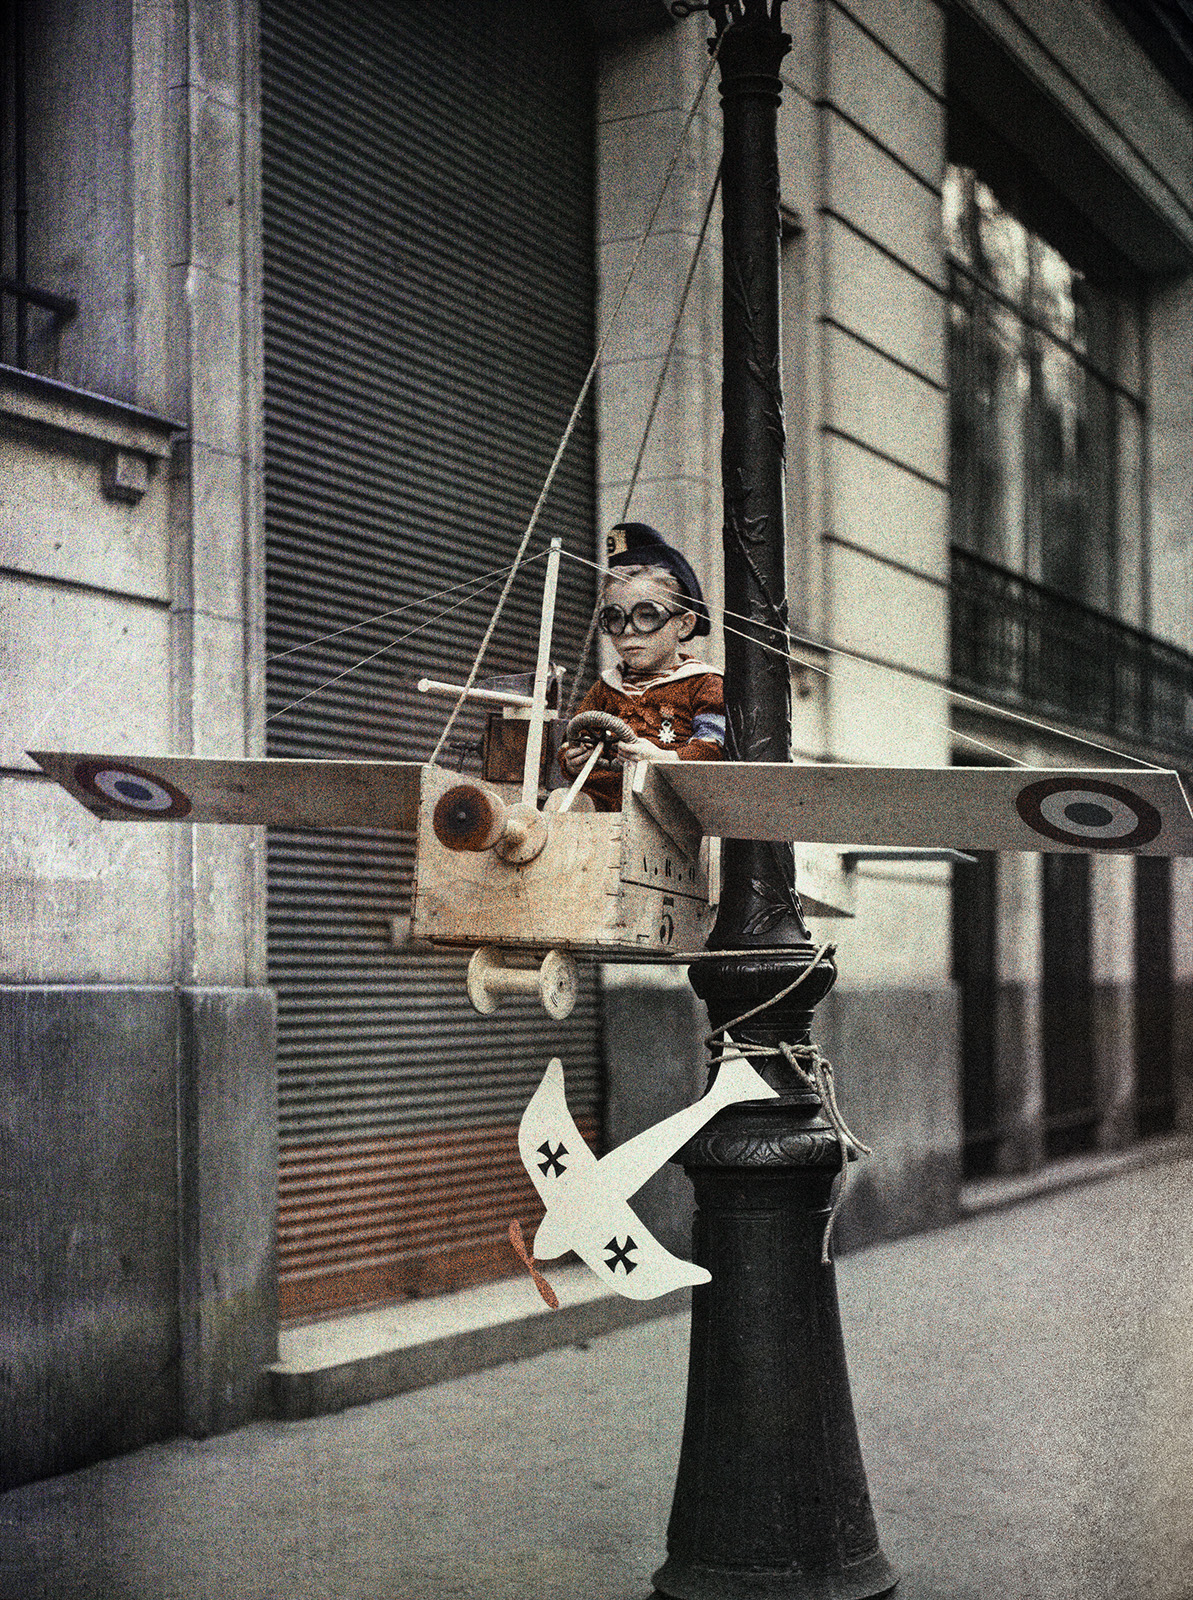 The aviator ‘Pépéte’ has just shot down a ‘taube’ with his machine gun. Paris, 19 September 1915.